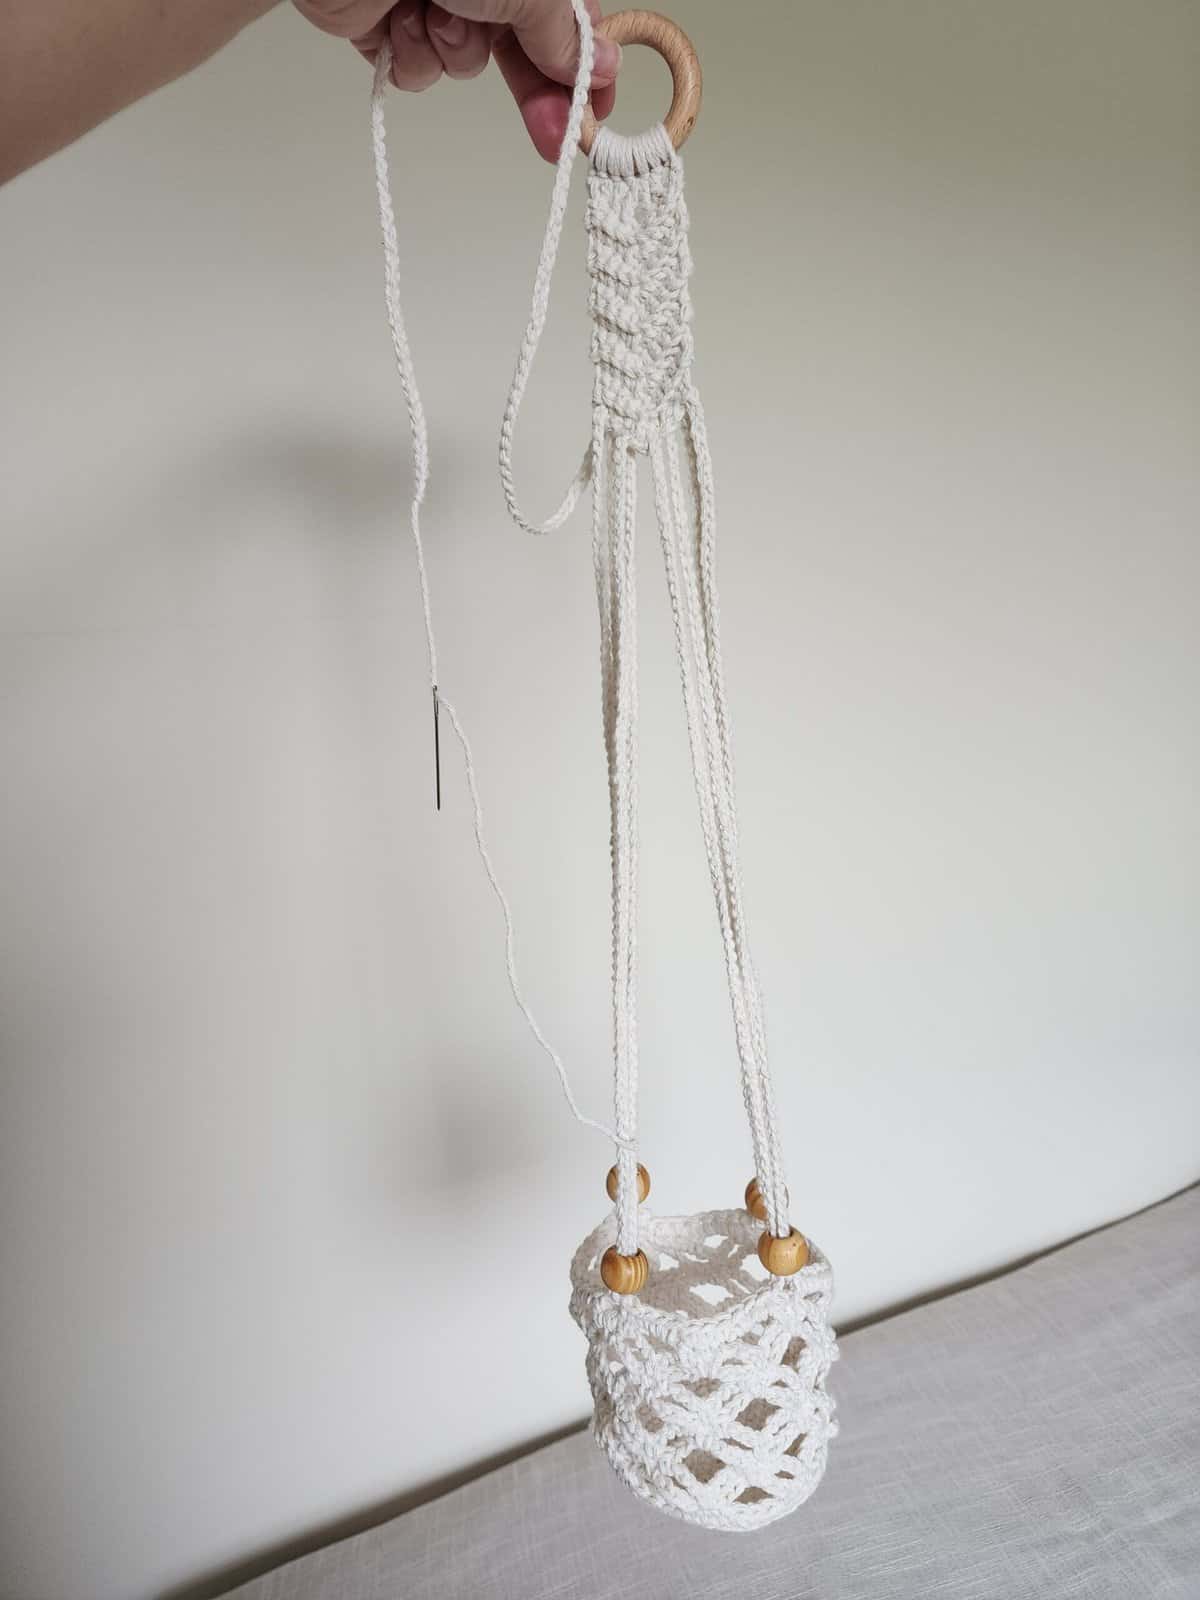 Hand holding crochet plant hanger up to adjust length of straps.